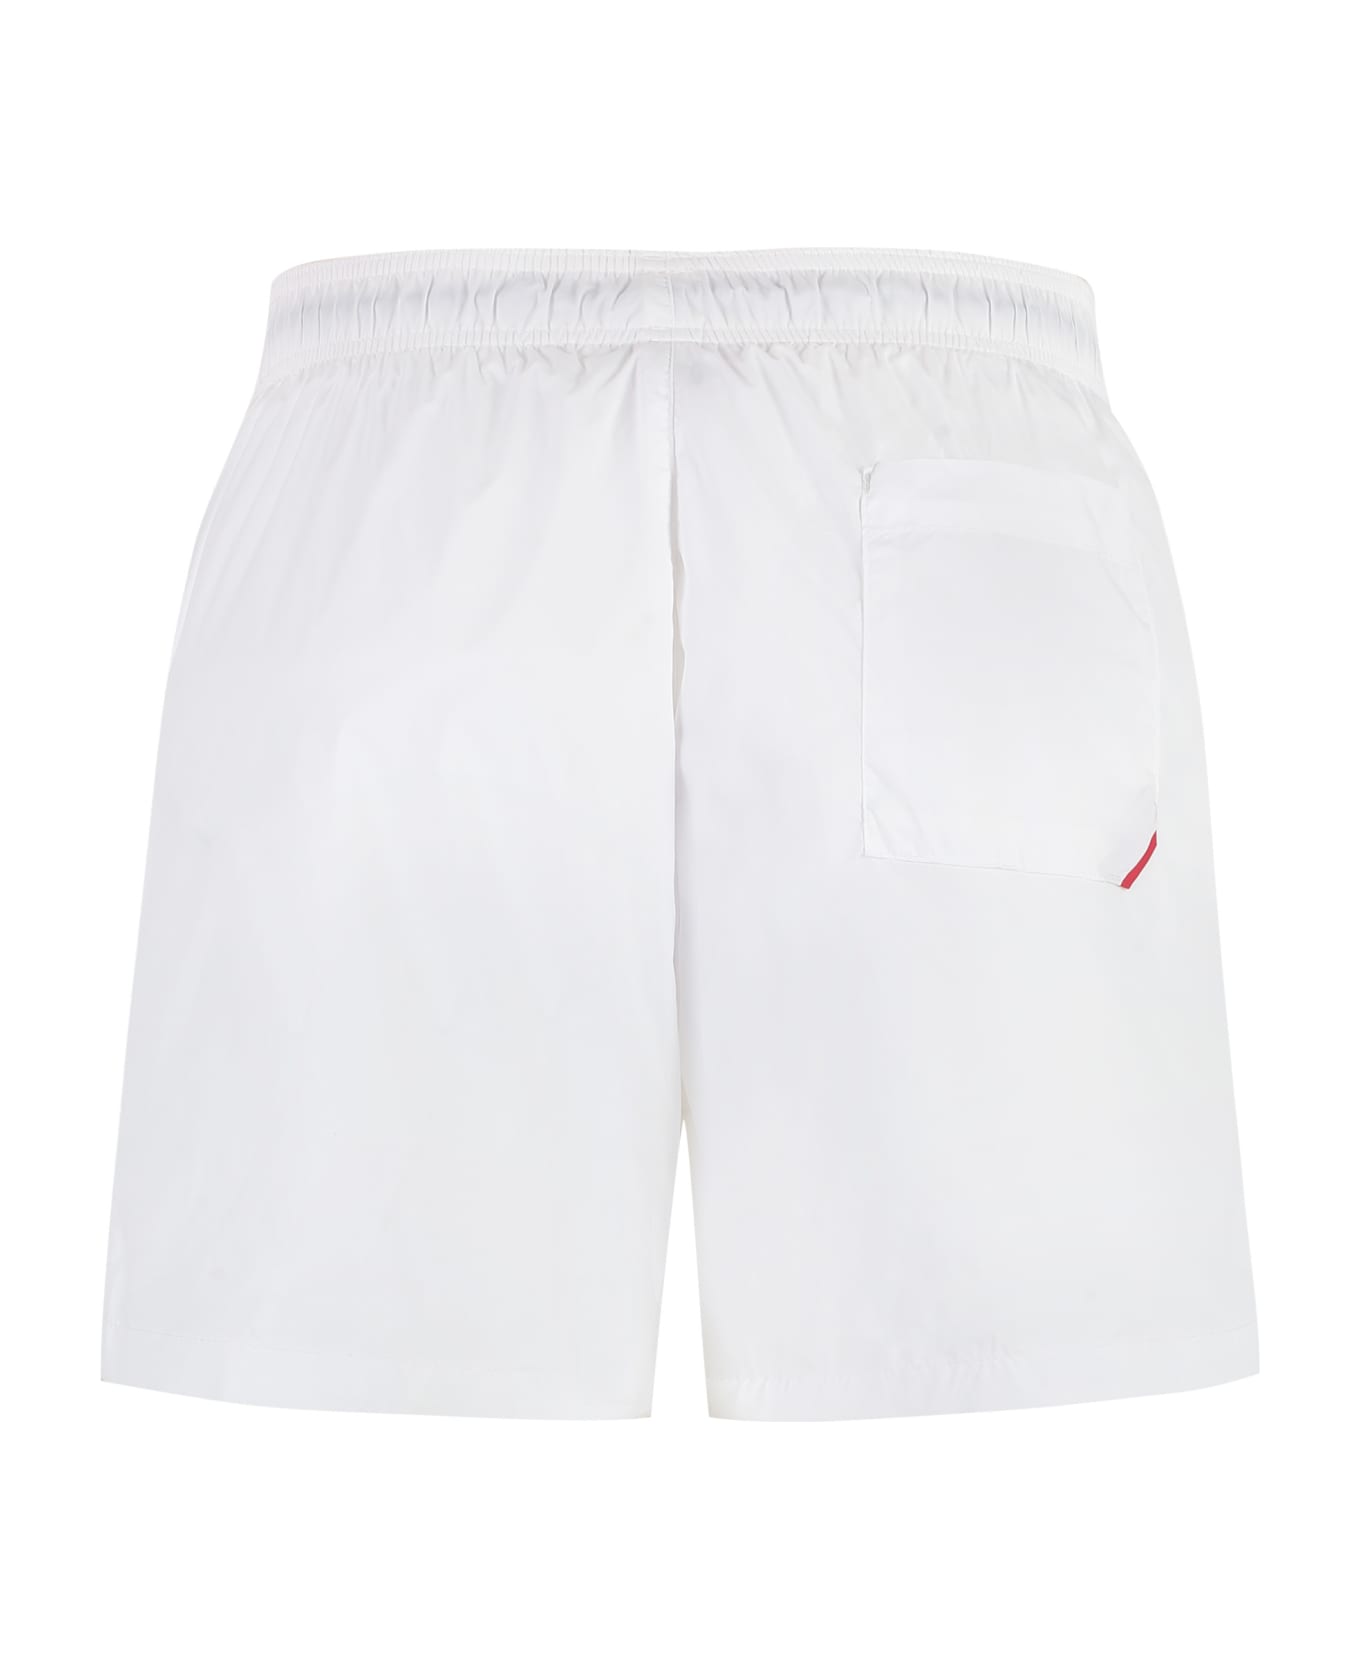 Hugo Boss Nylon Swim Shorts - White